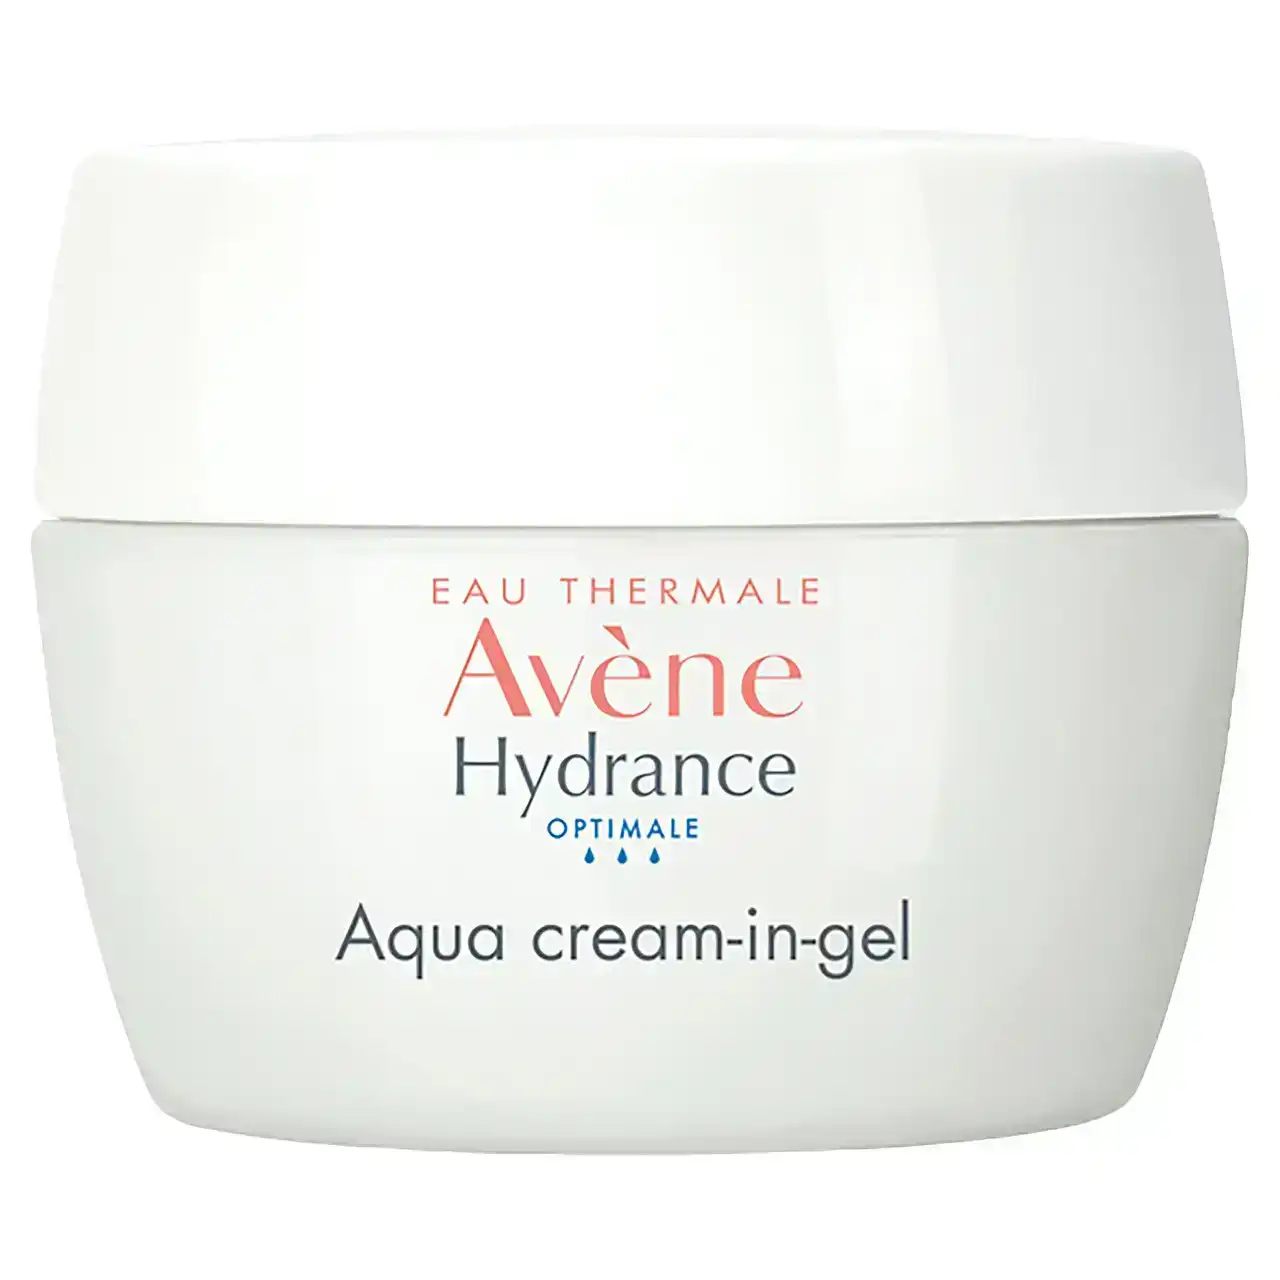 Avene Hydrance Optimale Aqua Cream-in-Gel 50ml - Moisturiser for dehydrated skin